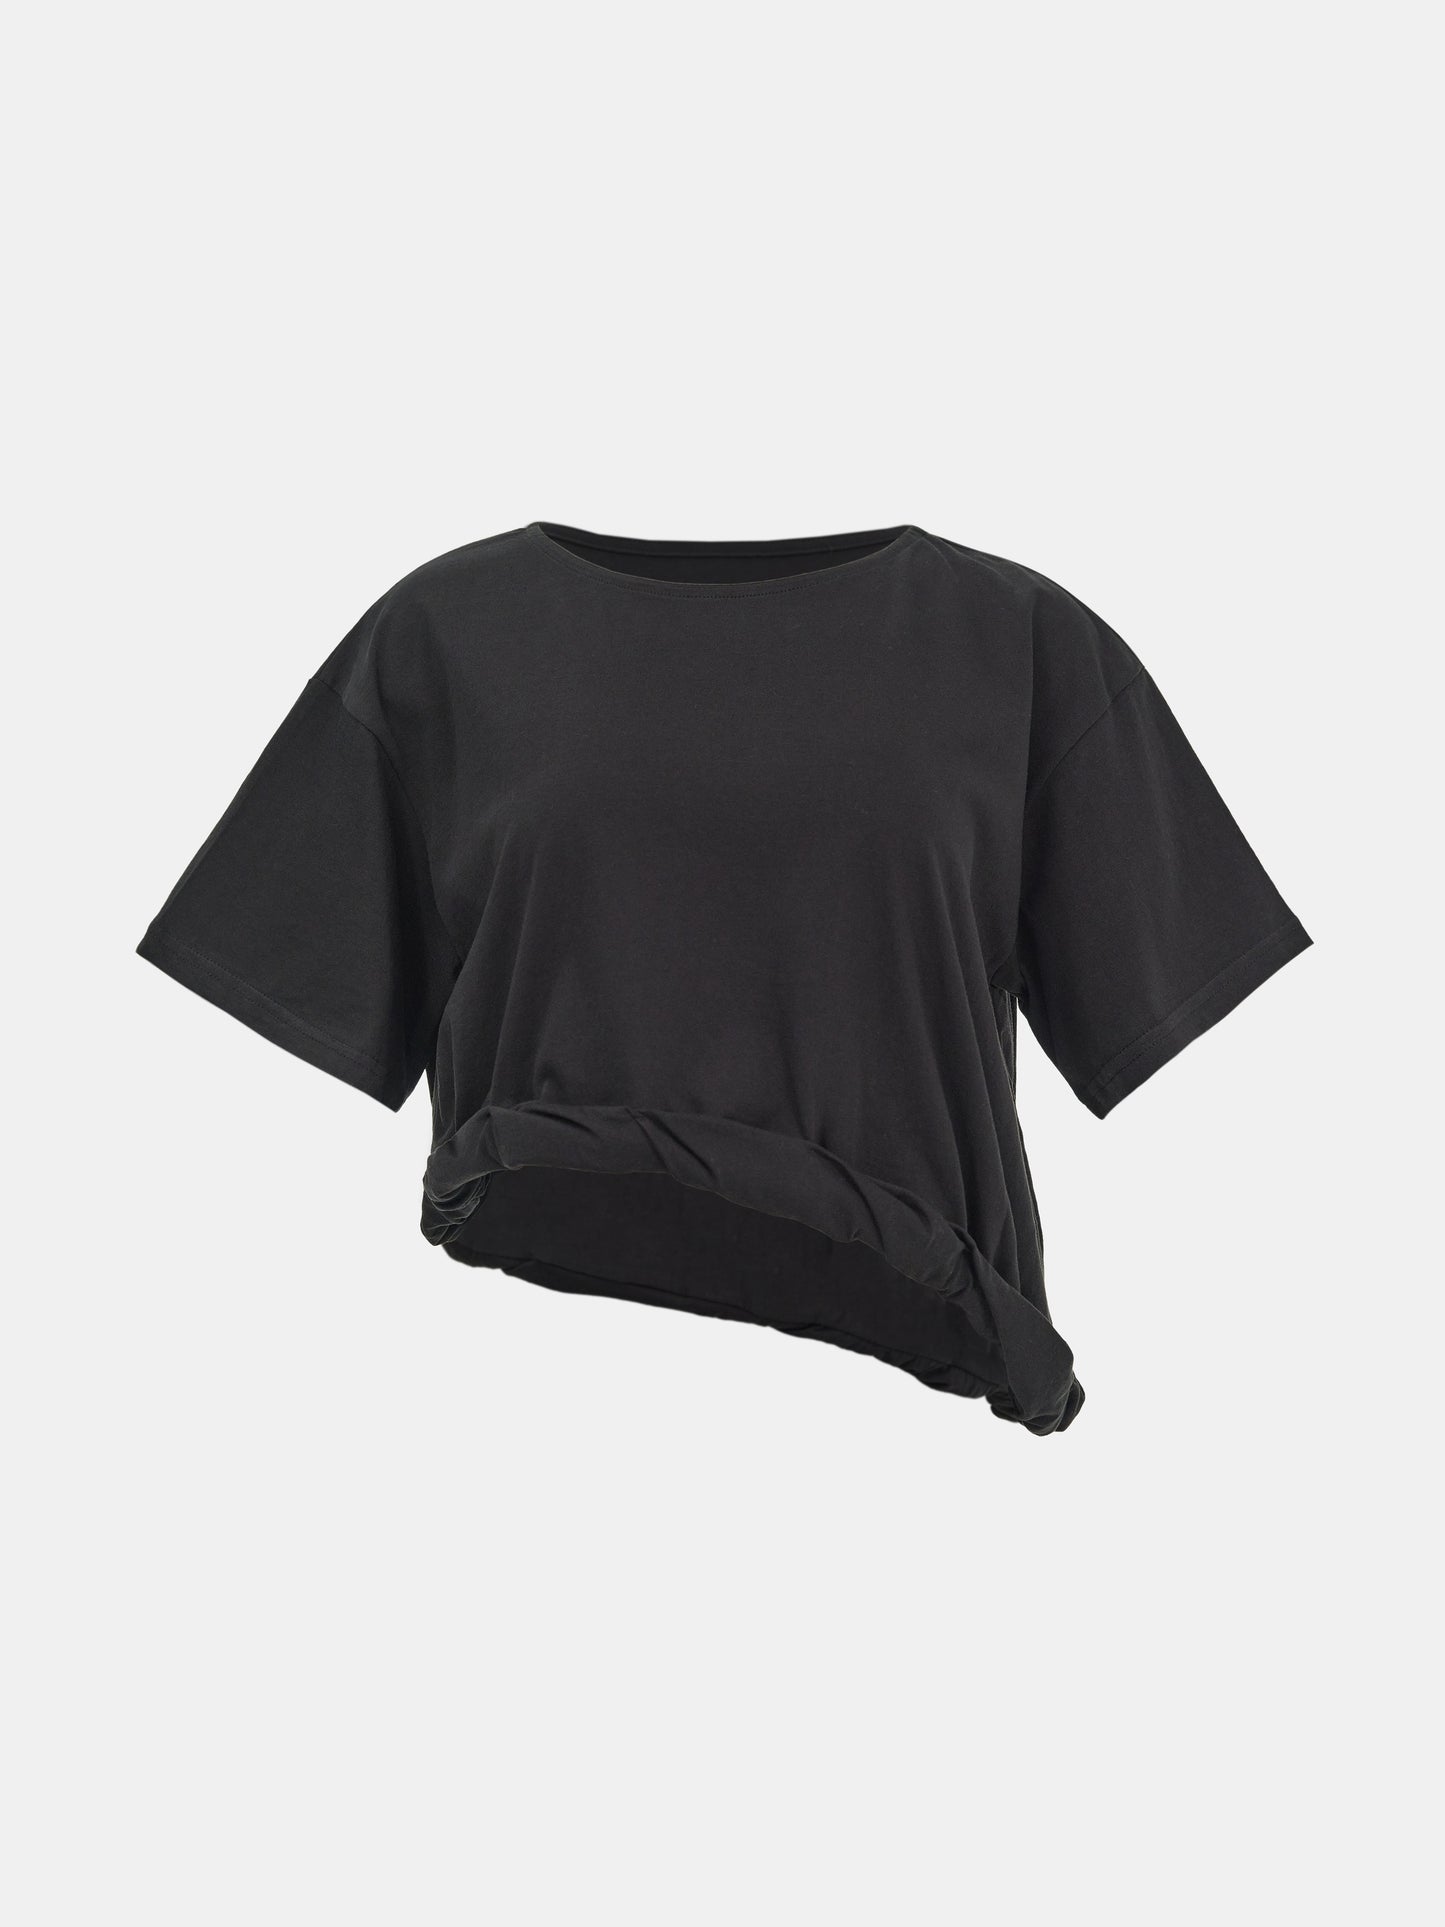 Twisted Cotton T-Shirt, Black